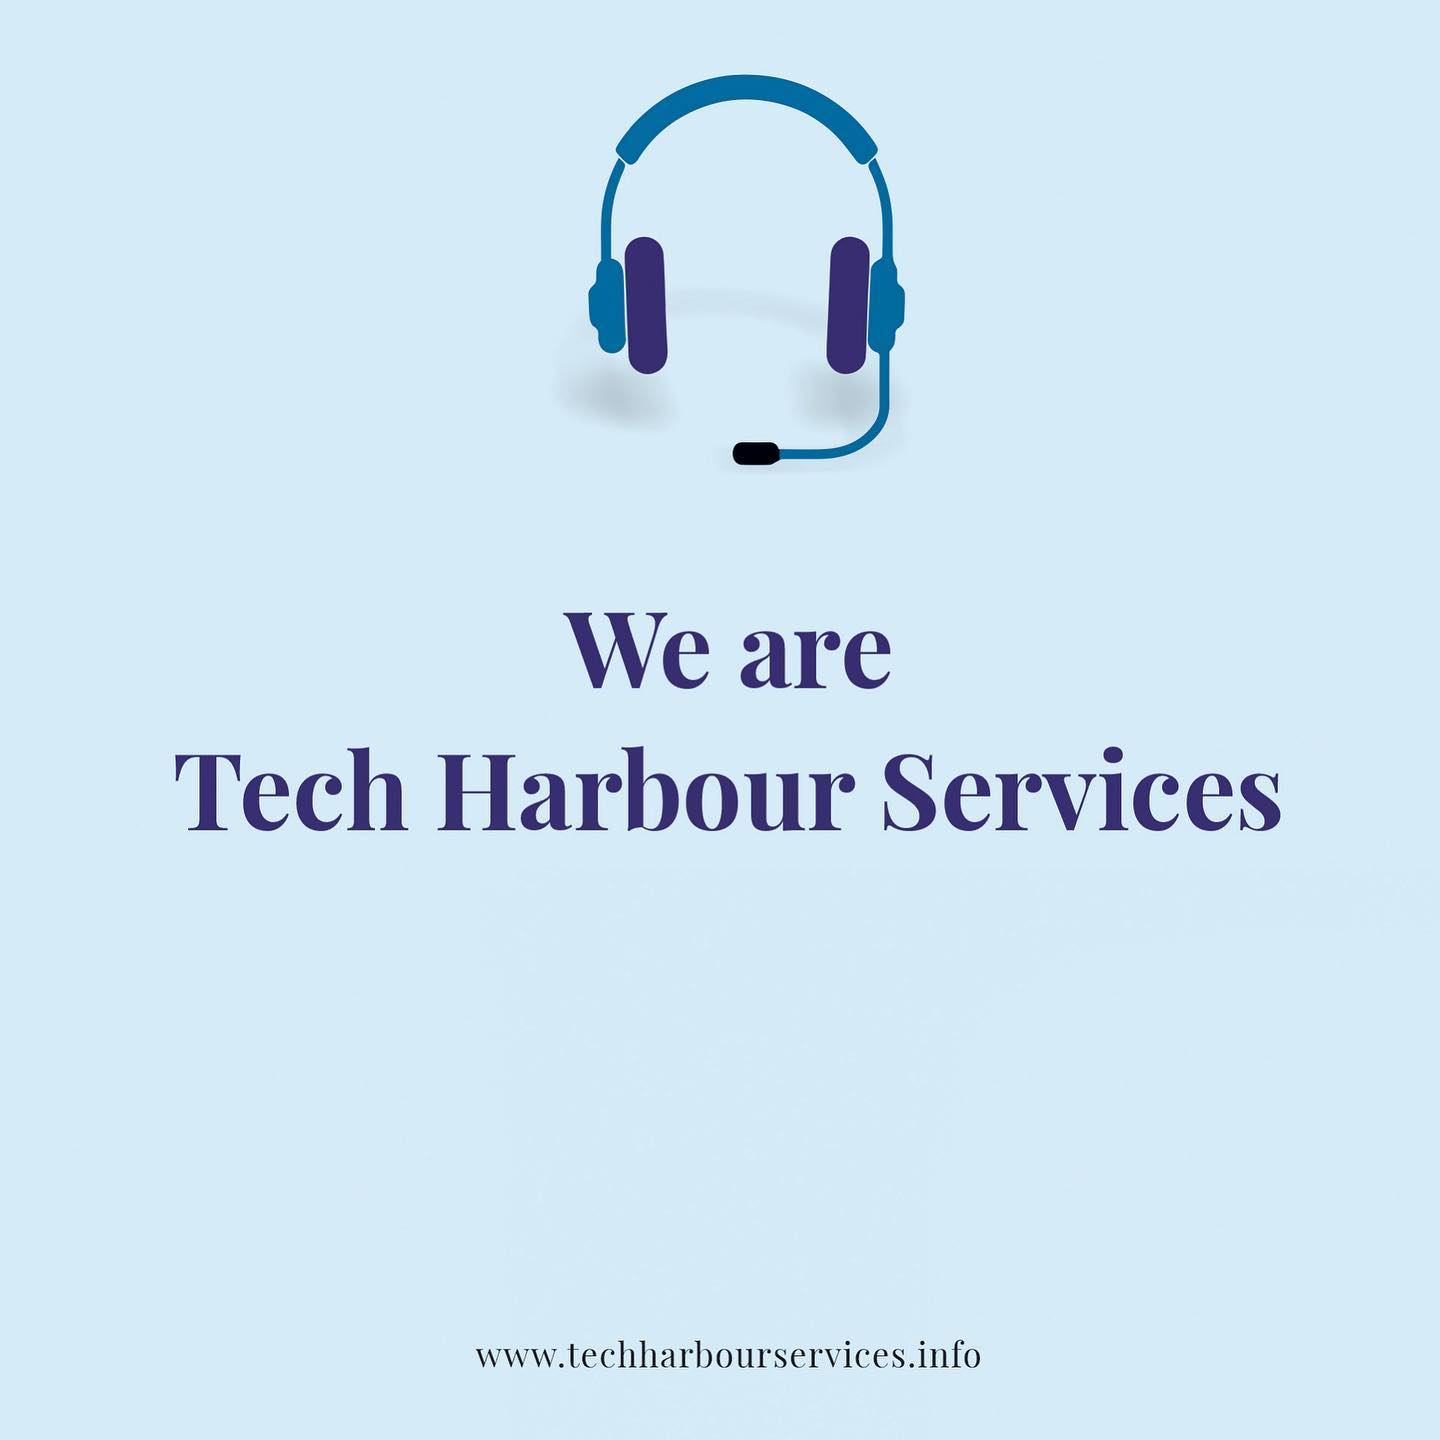 https://www.pakpositions.com/company/tech-harbour-services-1631891772